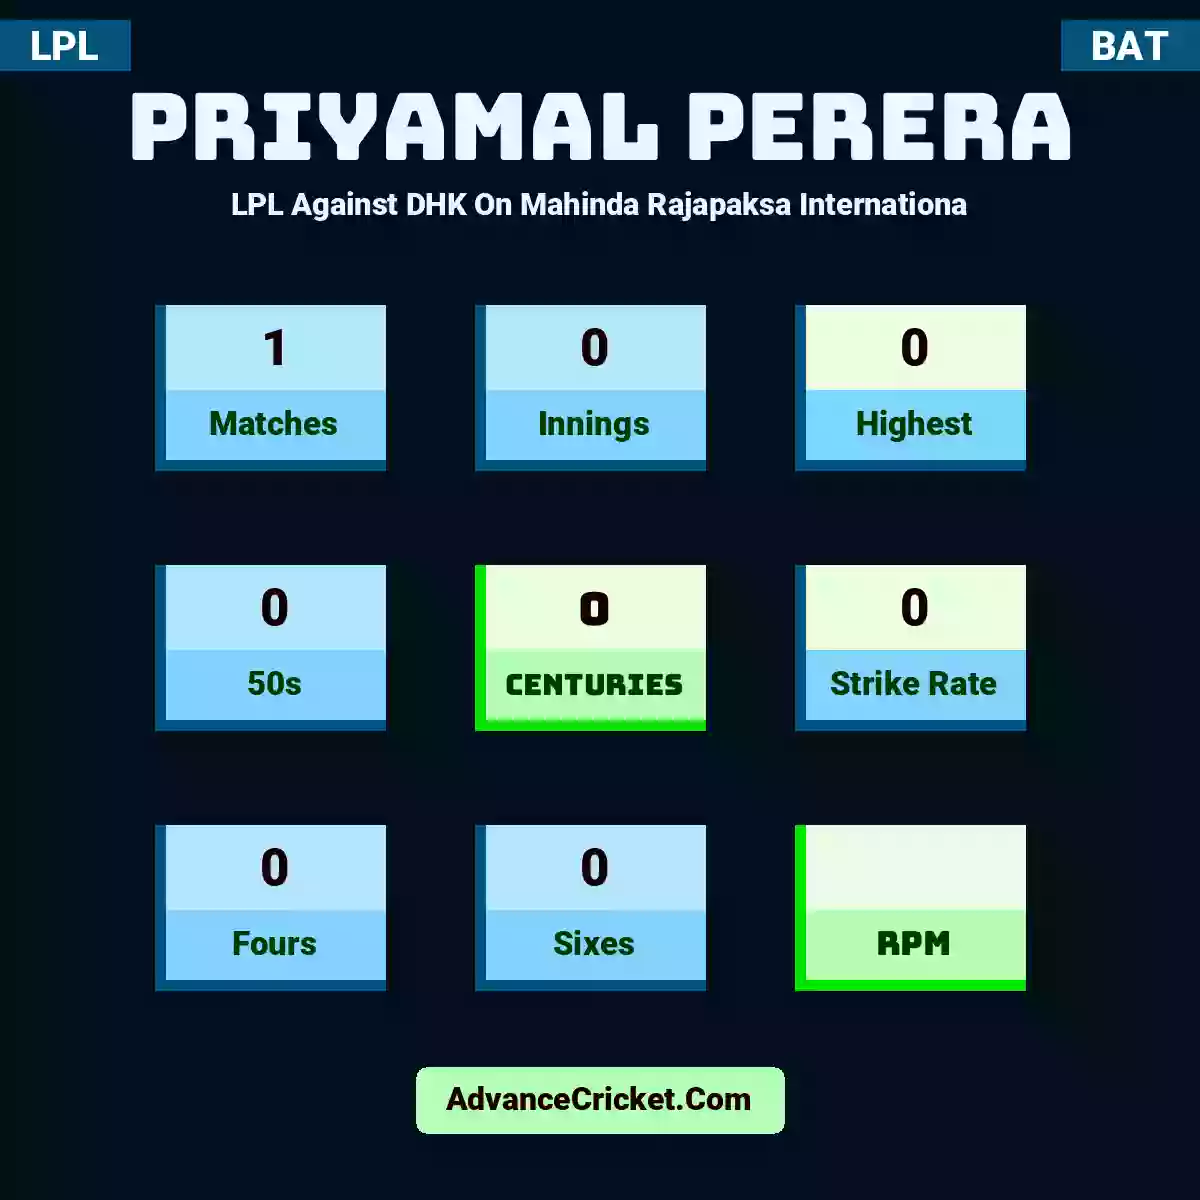 Priyamal Perera LPL  Against DHK On Mahinda Rajapaksa Internationa, Priyamal Perera played 1 matches, scored 0 runs as highest, 0 half-centuries, and 0 centuries, with a strike rate of 0. P.Perera hit 0 fours and 0 sixes.